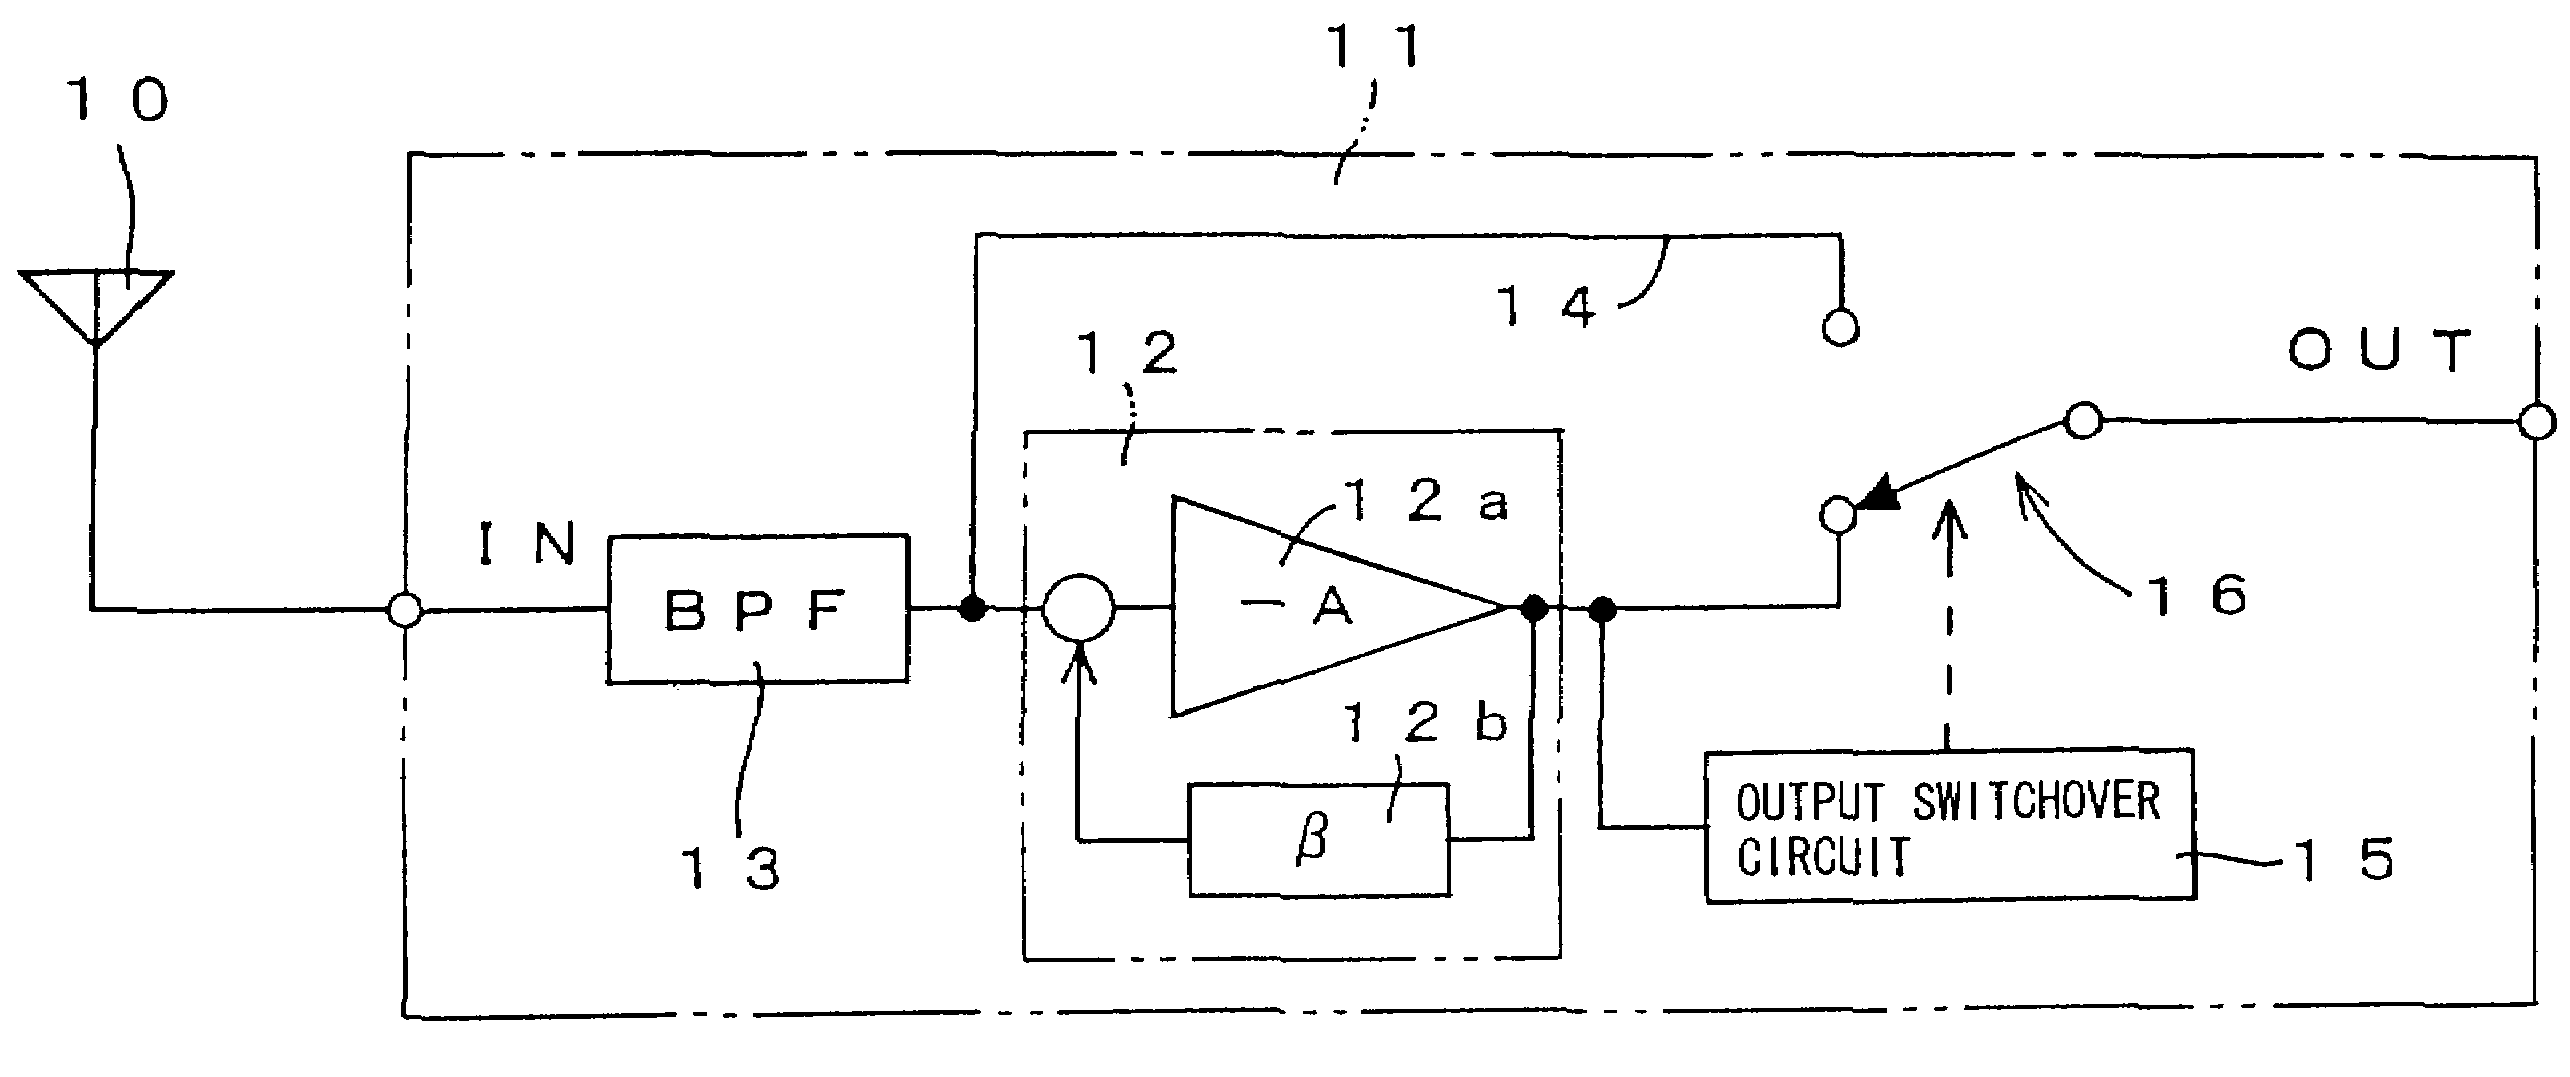 Antenna amplifier and shared antenna amplifier